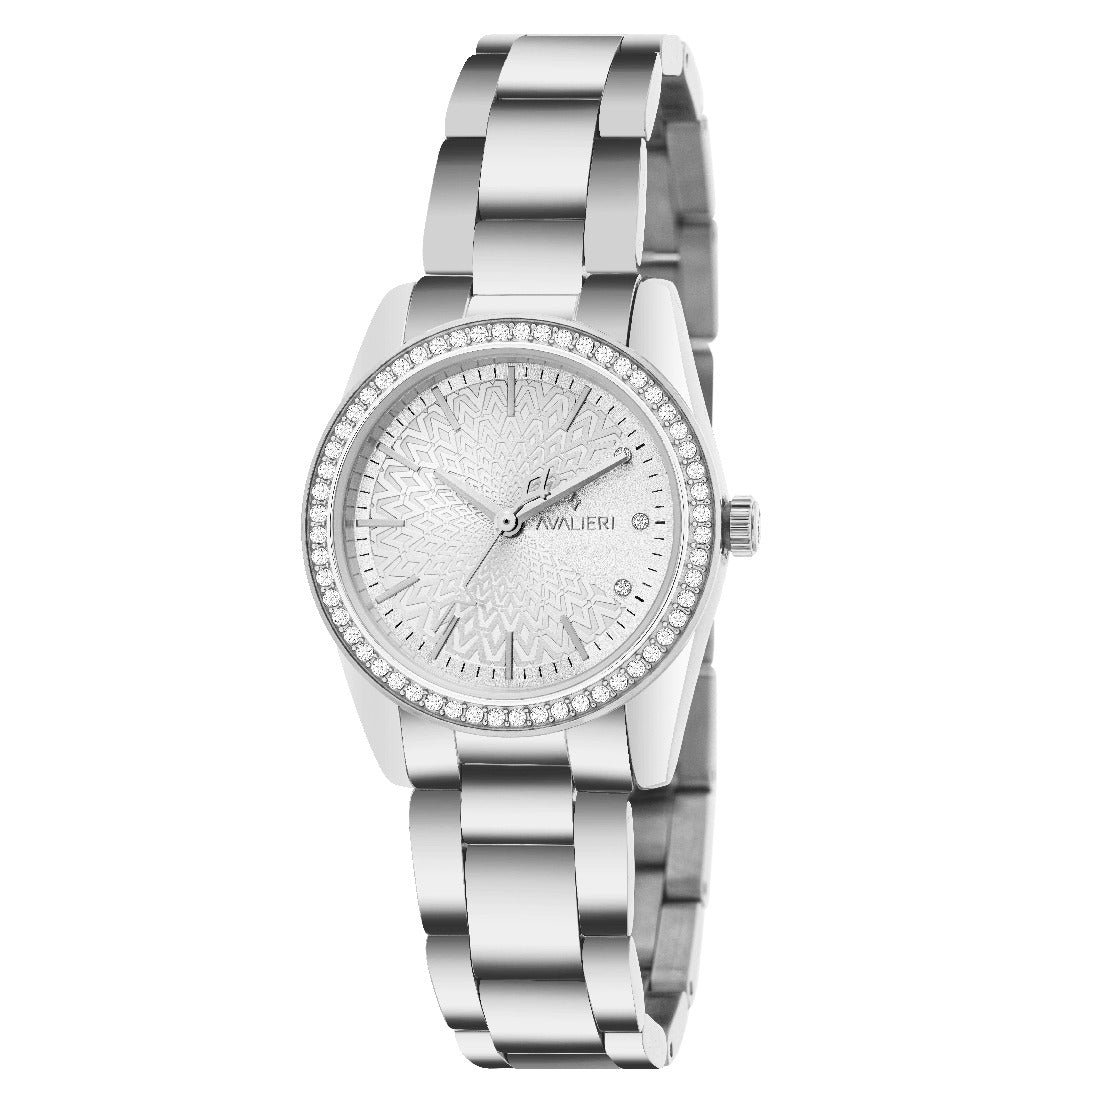 Avalieri Women's Quartz Watch With Silver White Dial - AV-2478B